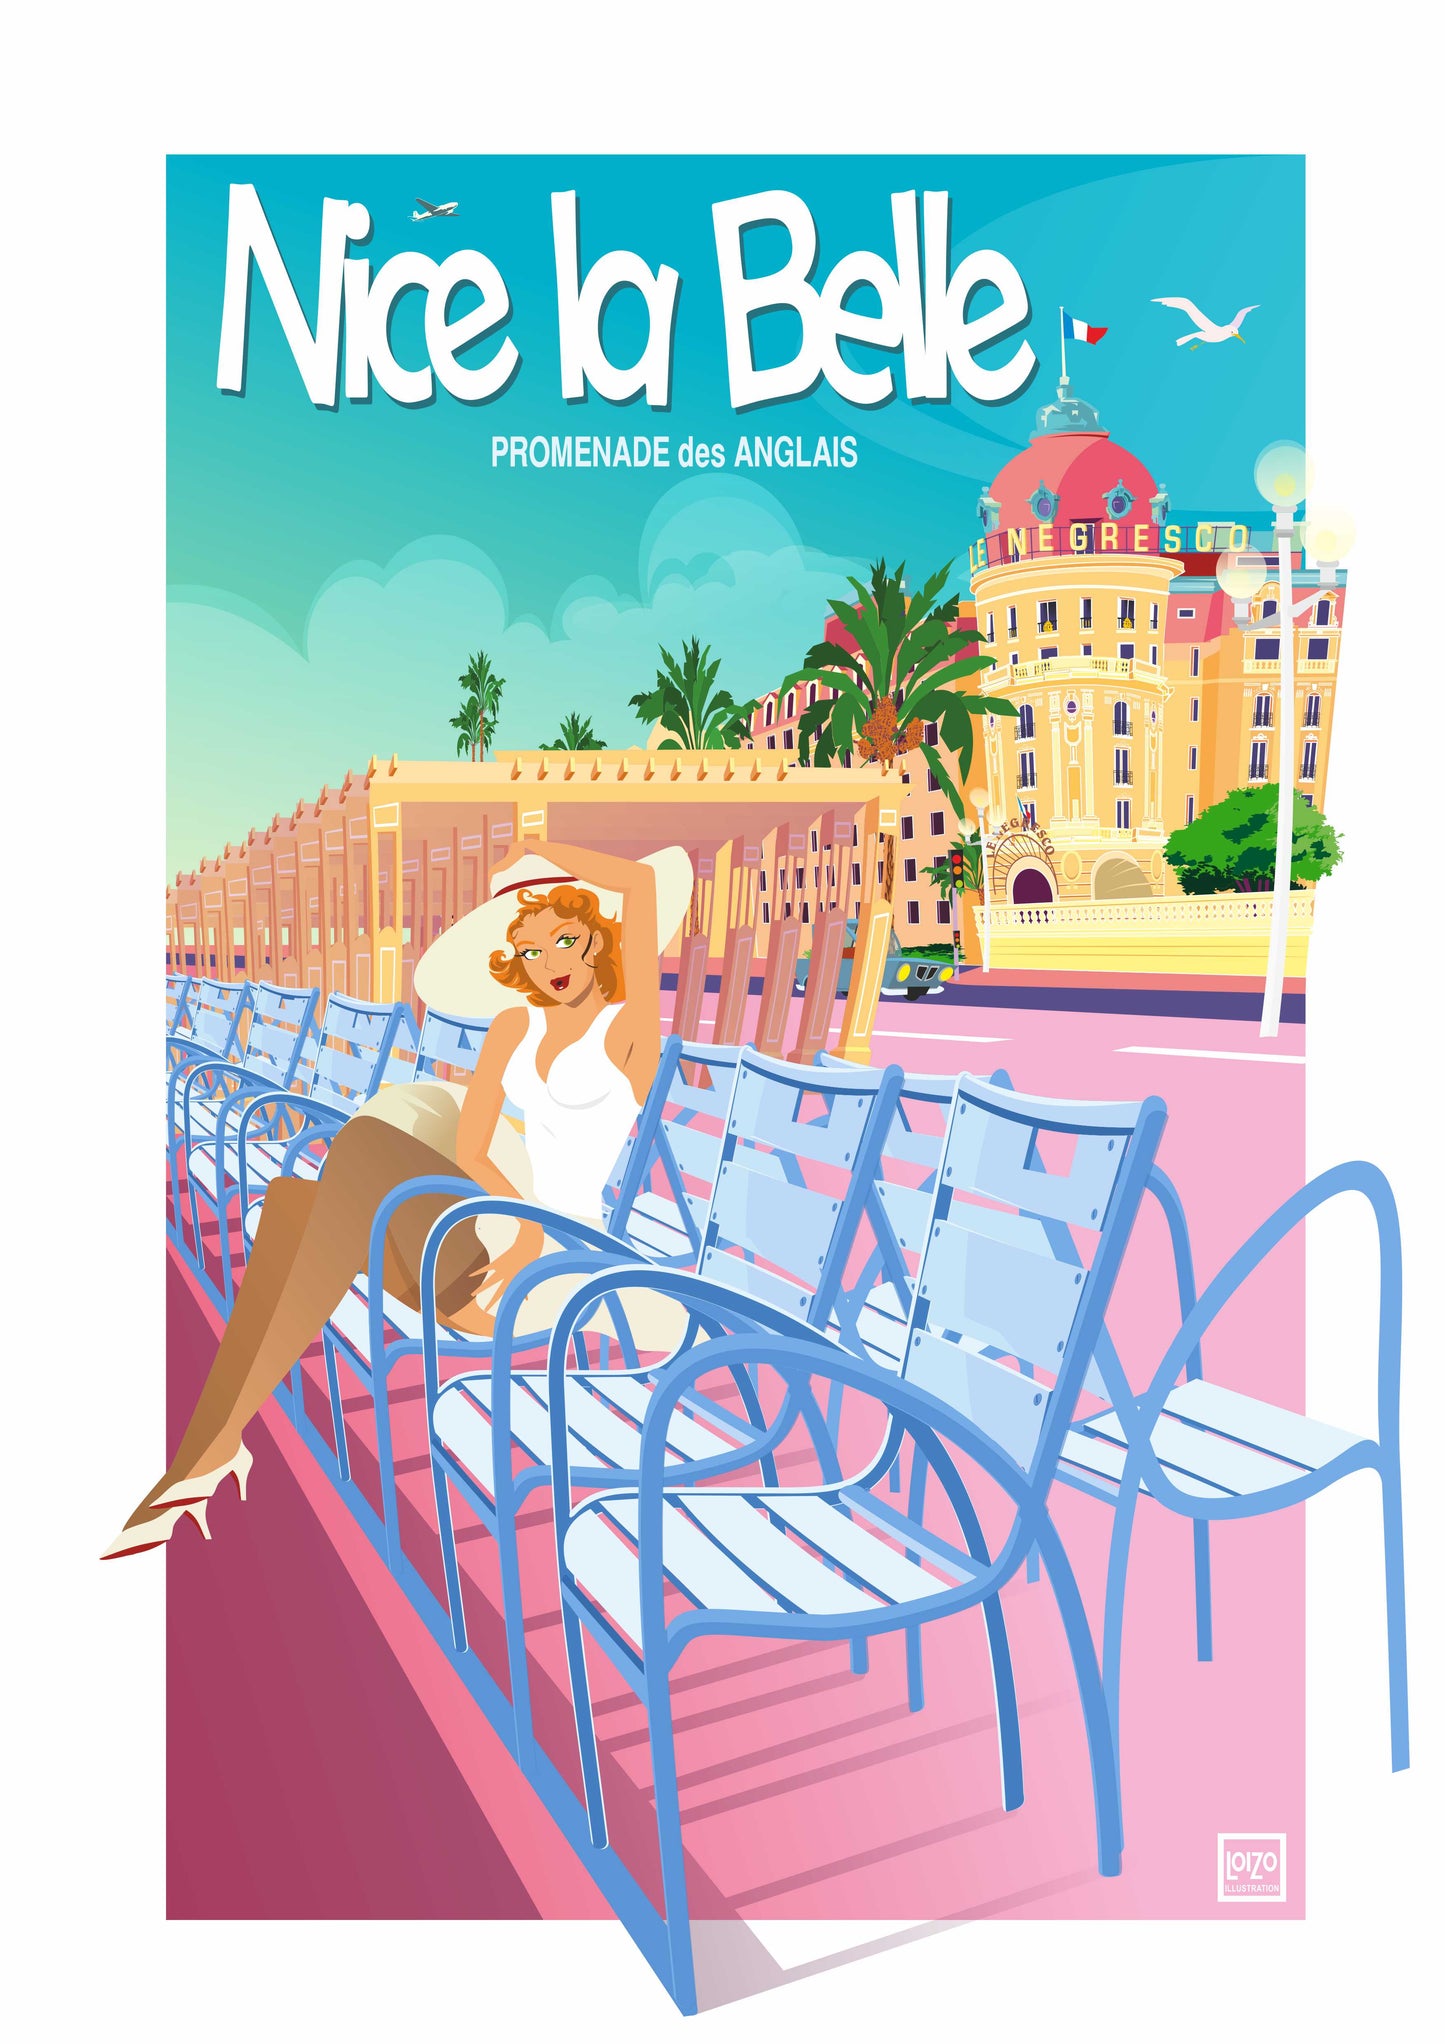 Nice la Belle "Promenade des Anglais" PIN-UP